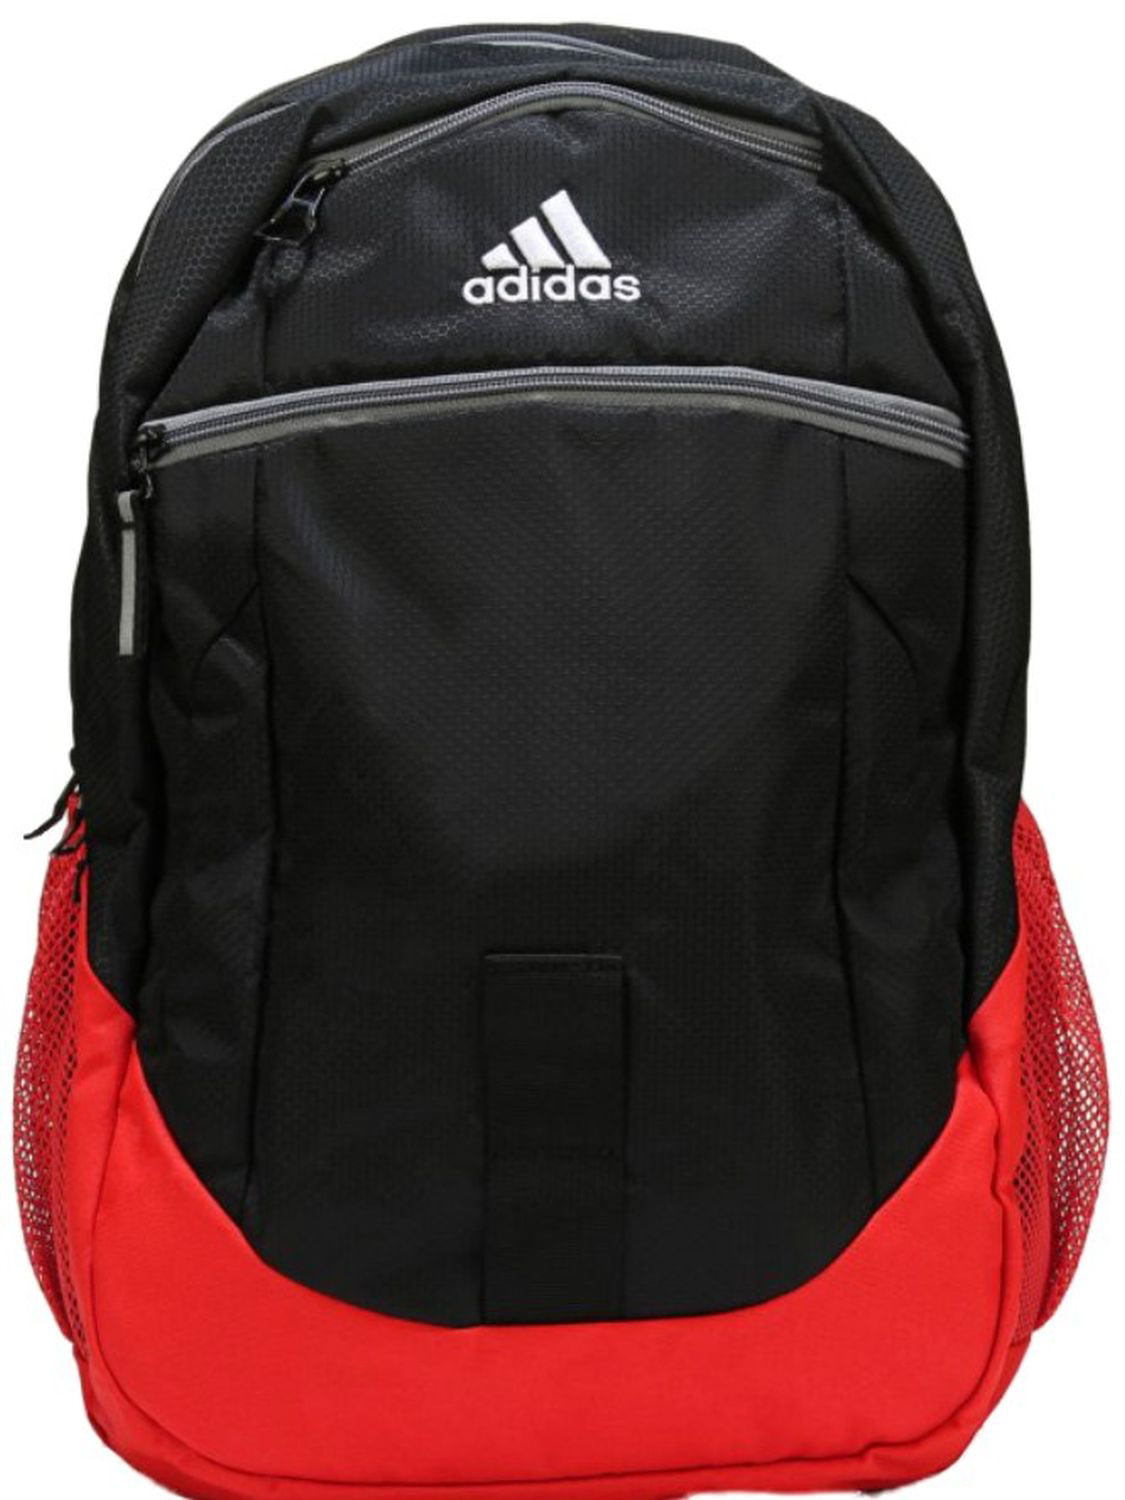 adidas Foundation 19 inch Backpack 